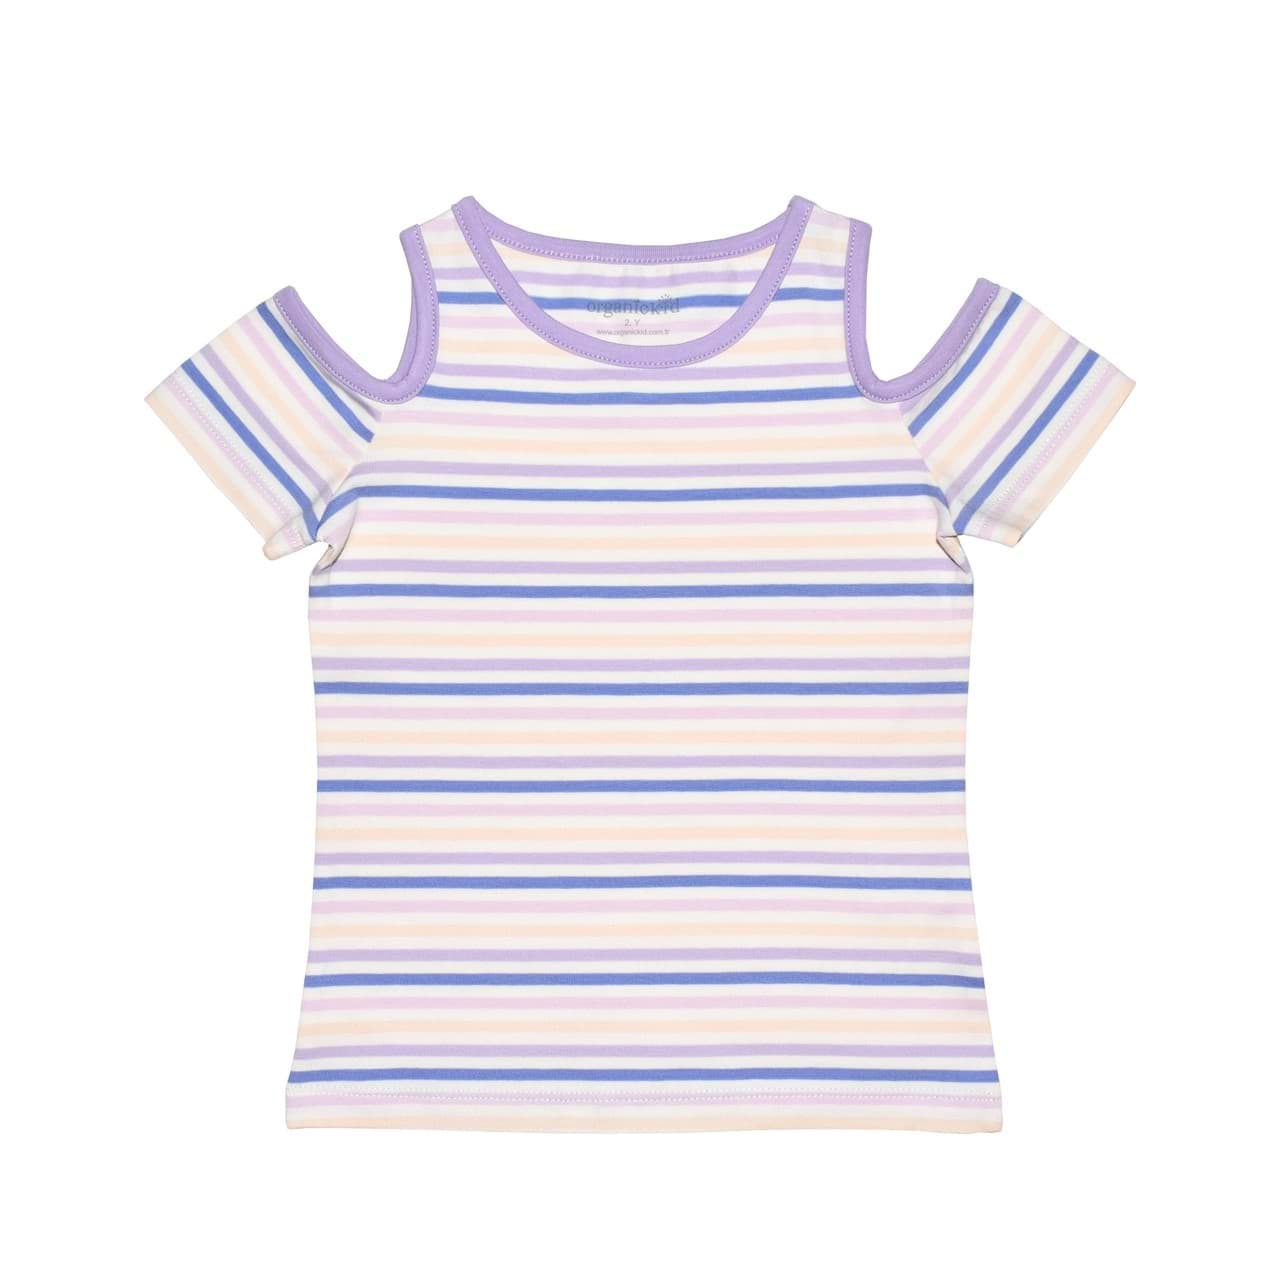 Merkitty Kız Çocuk Çizgili T-shirt resmi